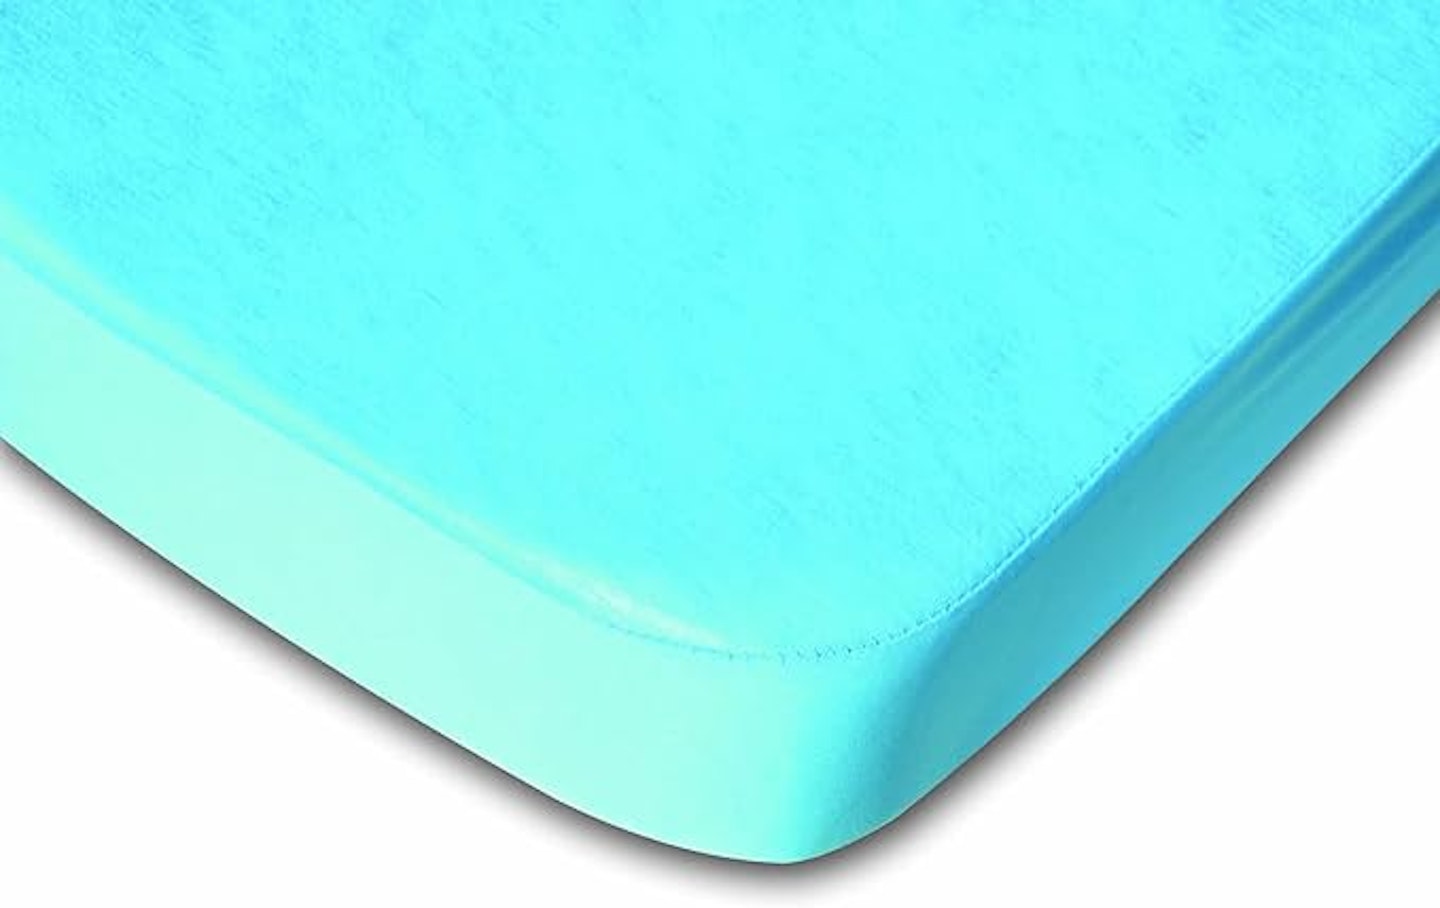 Waterproof mattress covers